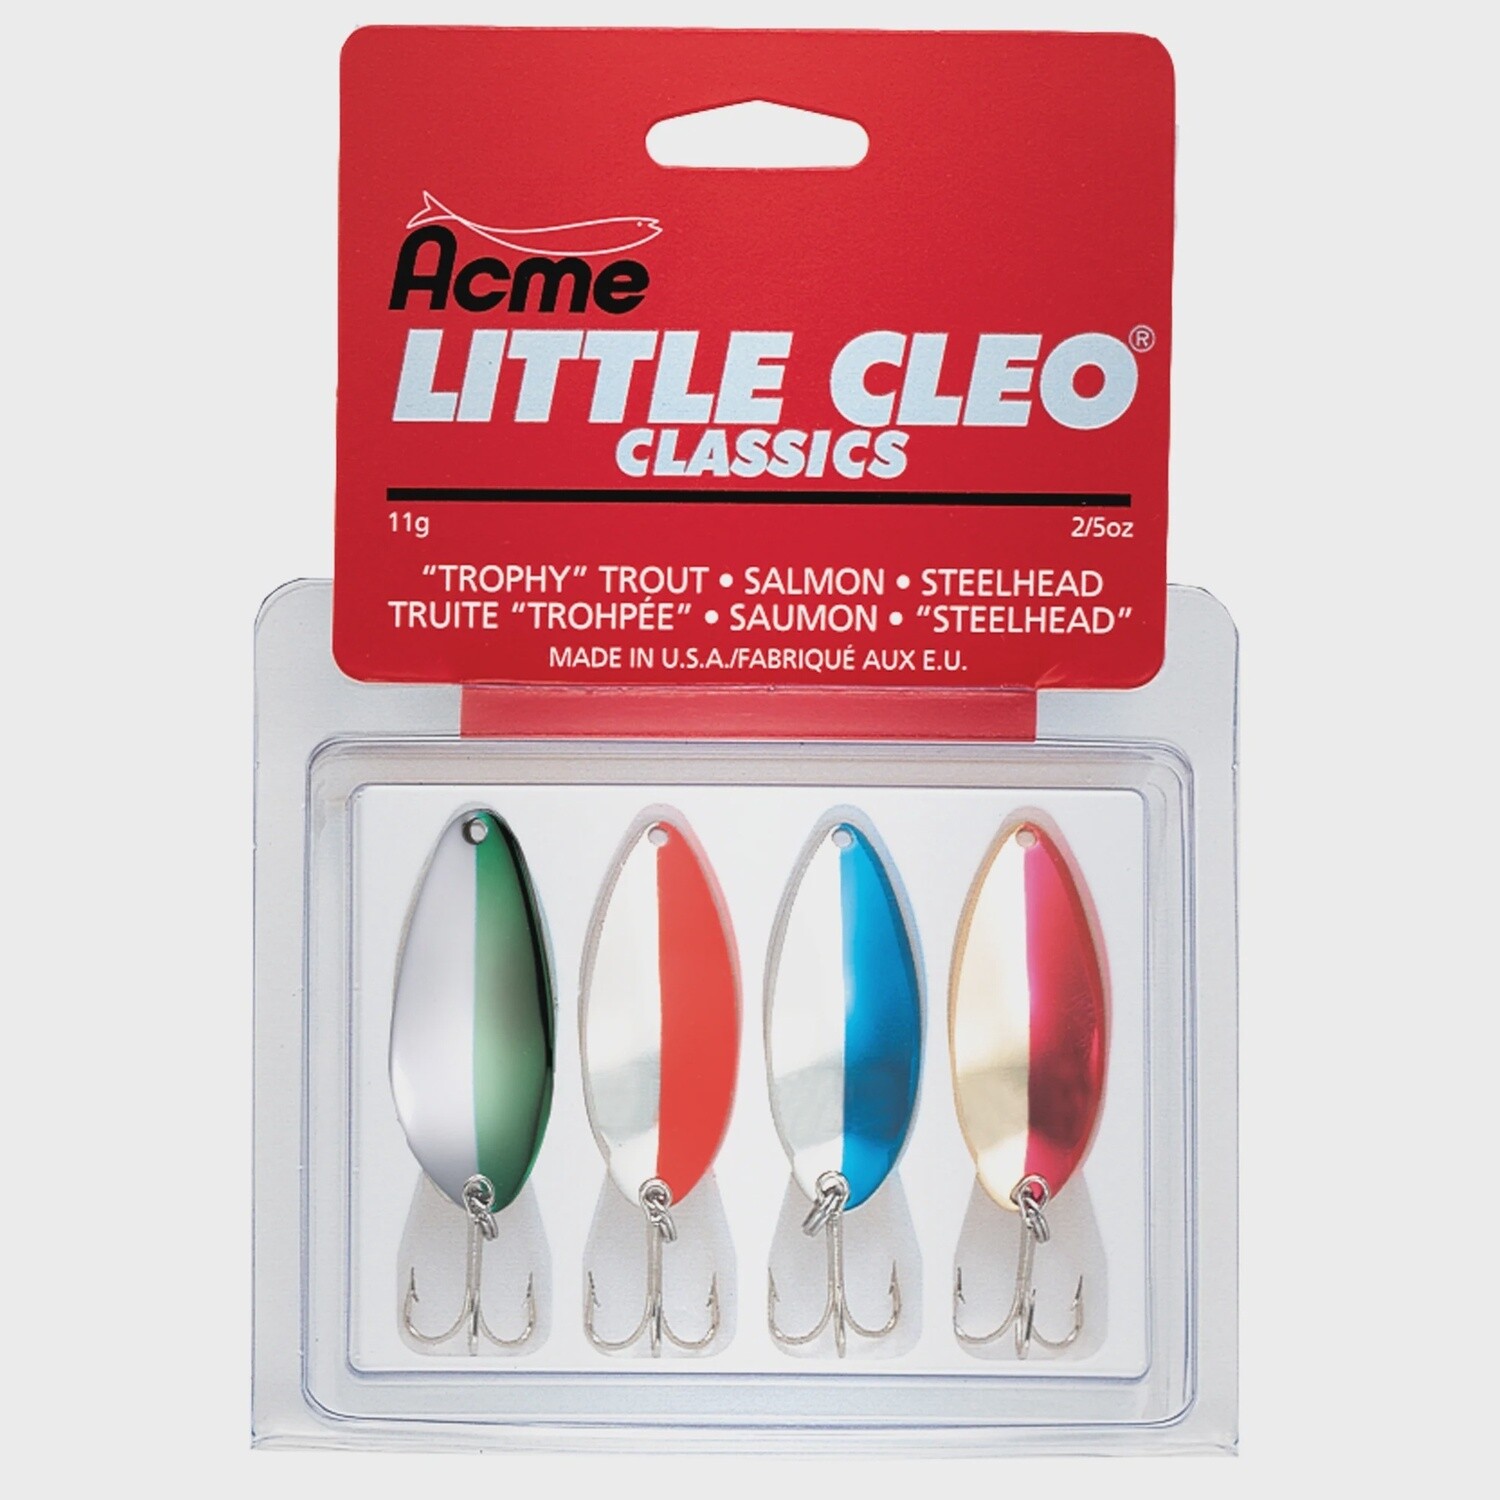 Acme Little Cleo Spoon Classics 4pc